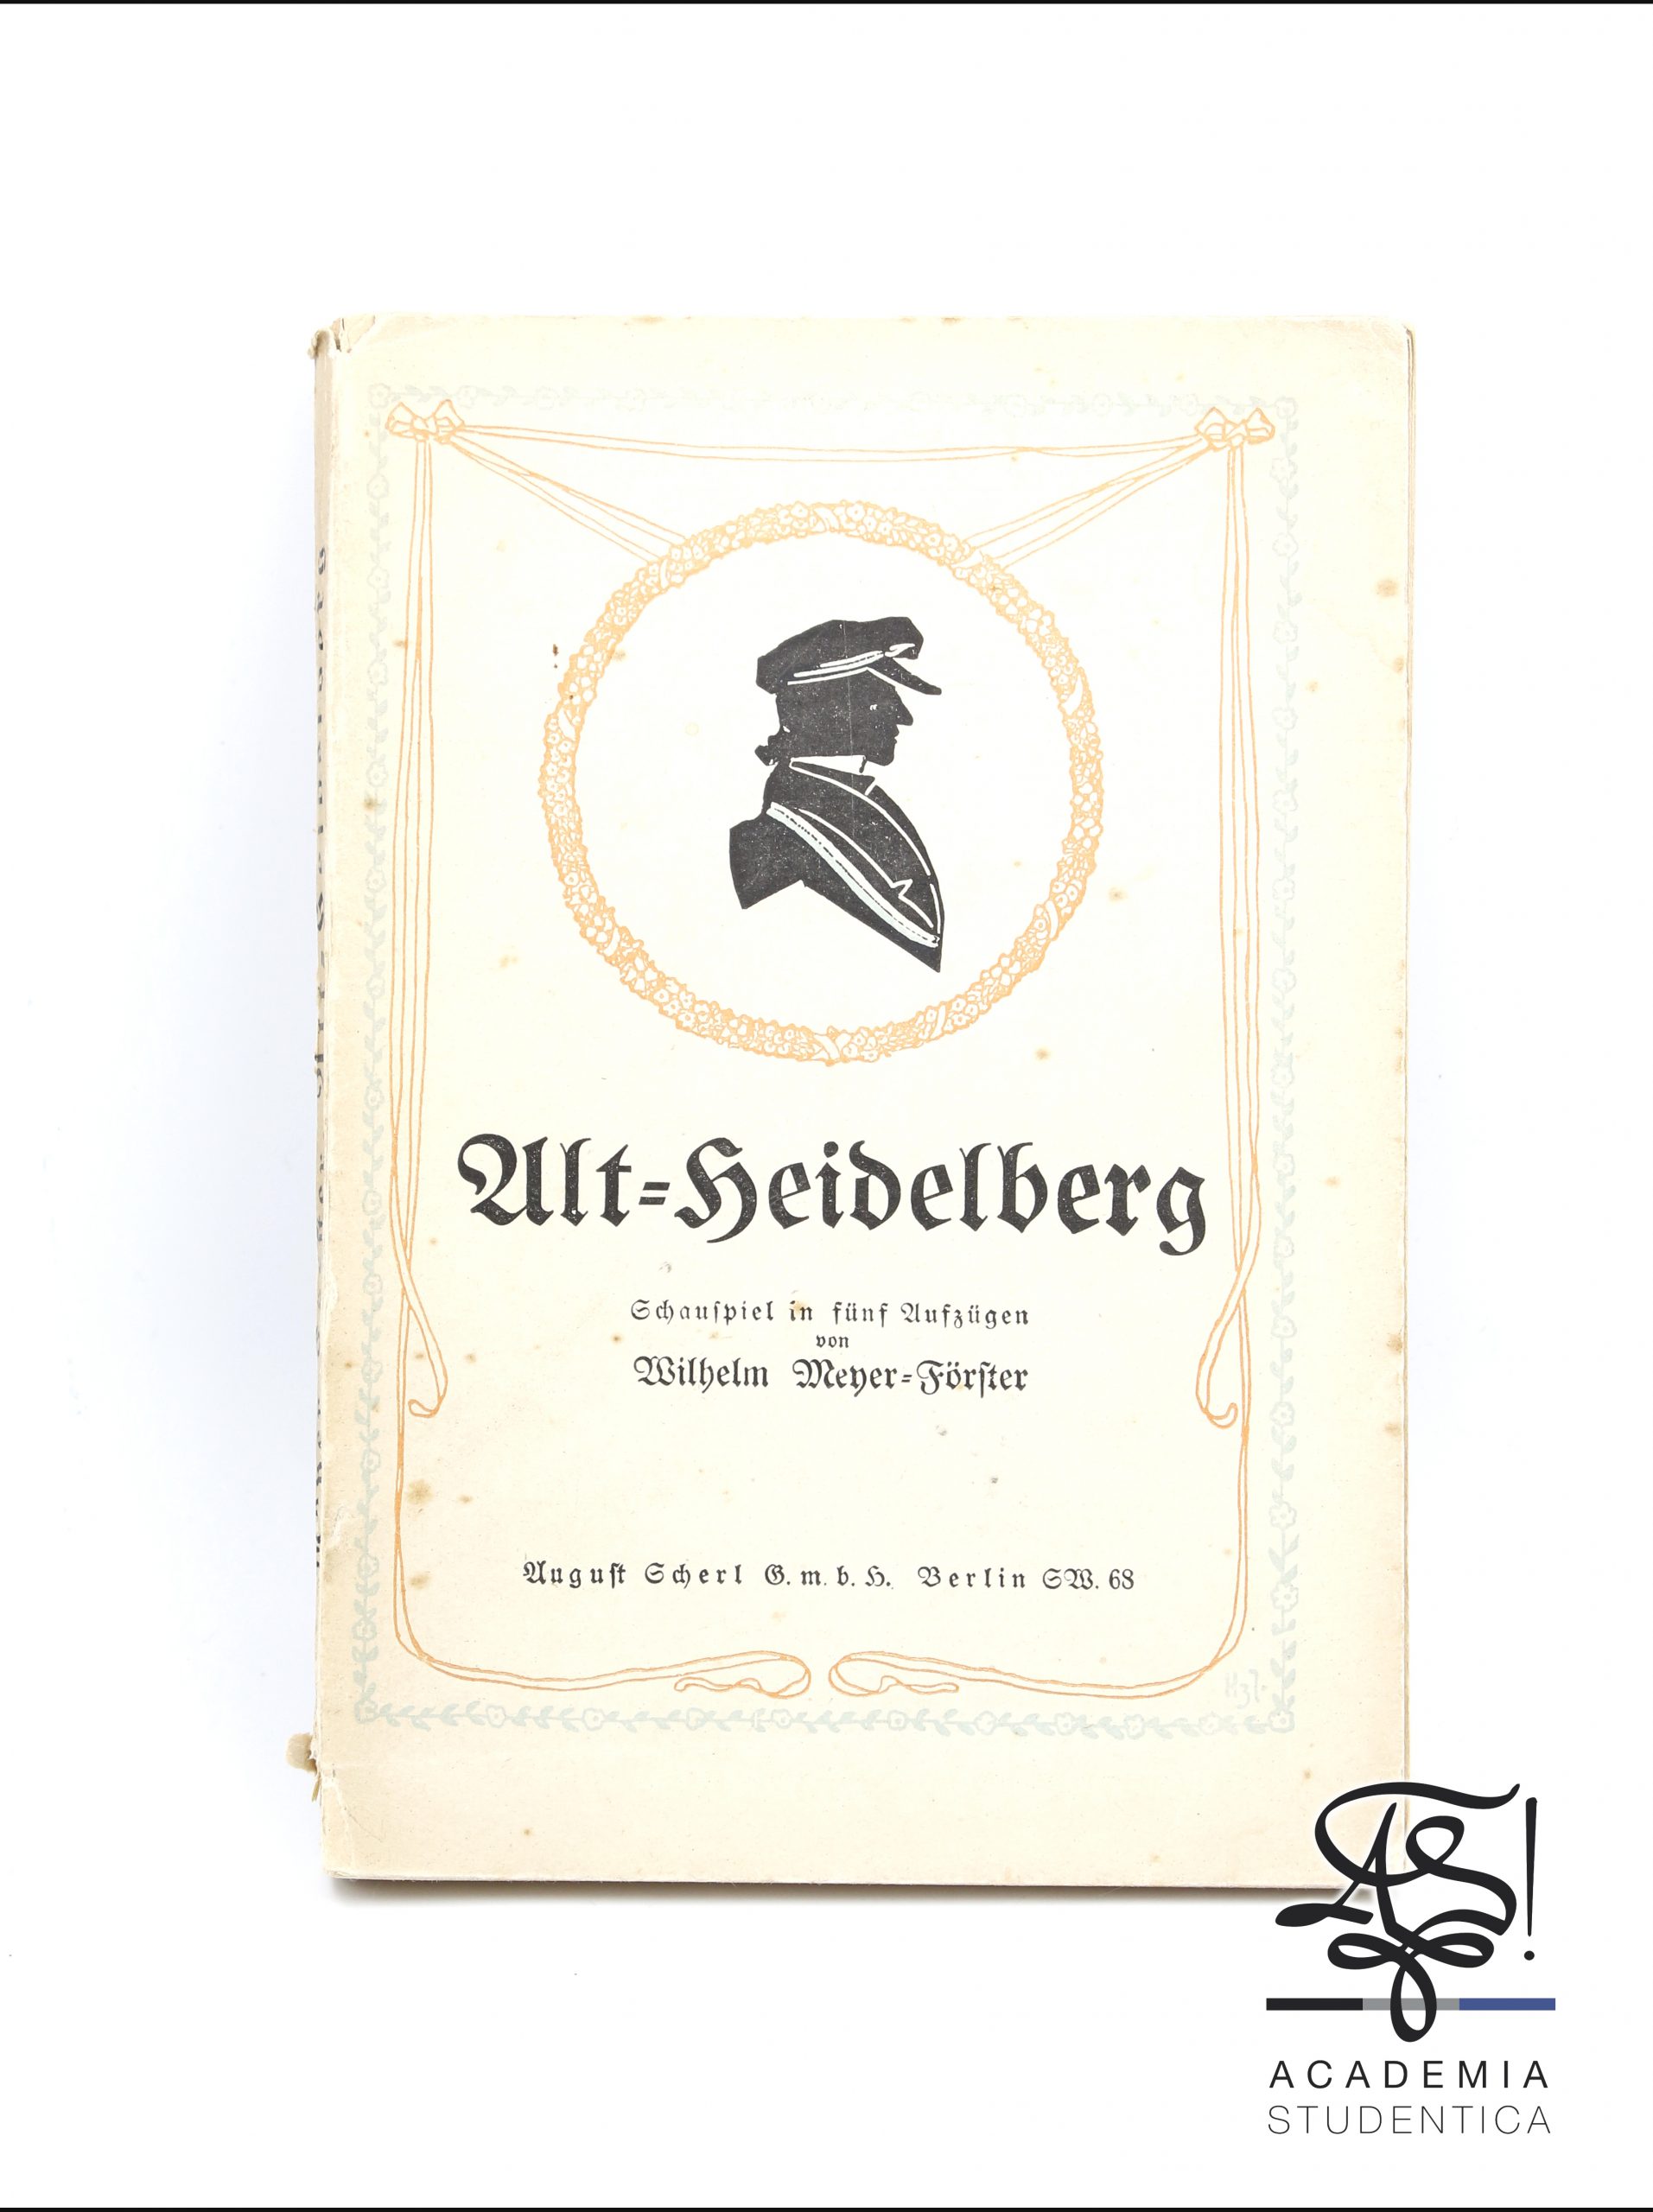 Read more about the article Meyer-Förster, Wilhelm, Alt-Heidelberg, August Scherl Gmbh, Germany, Berlin, 1902.